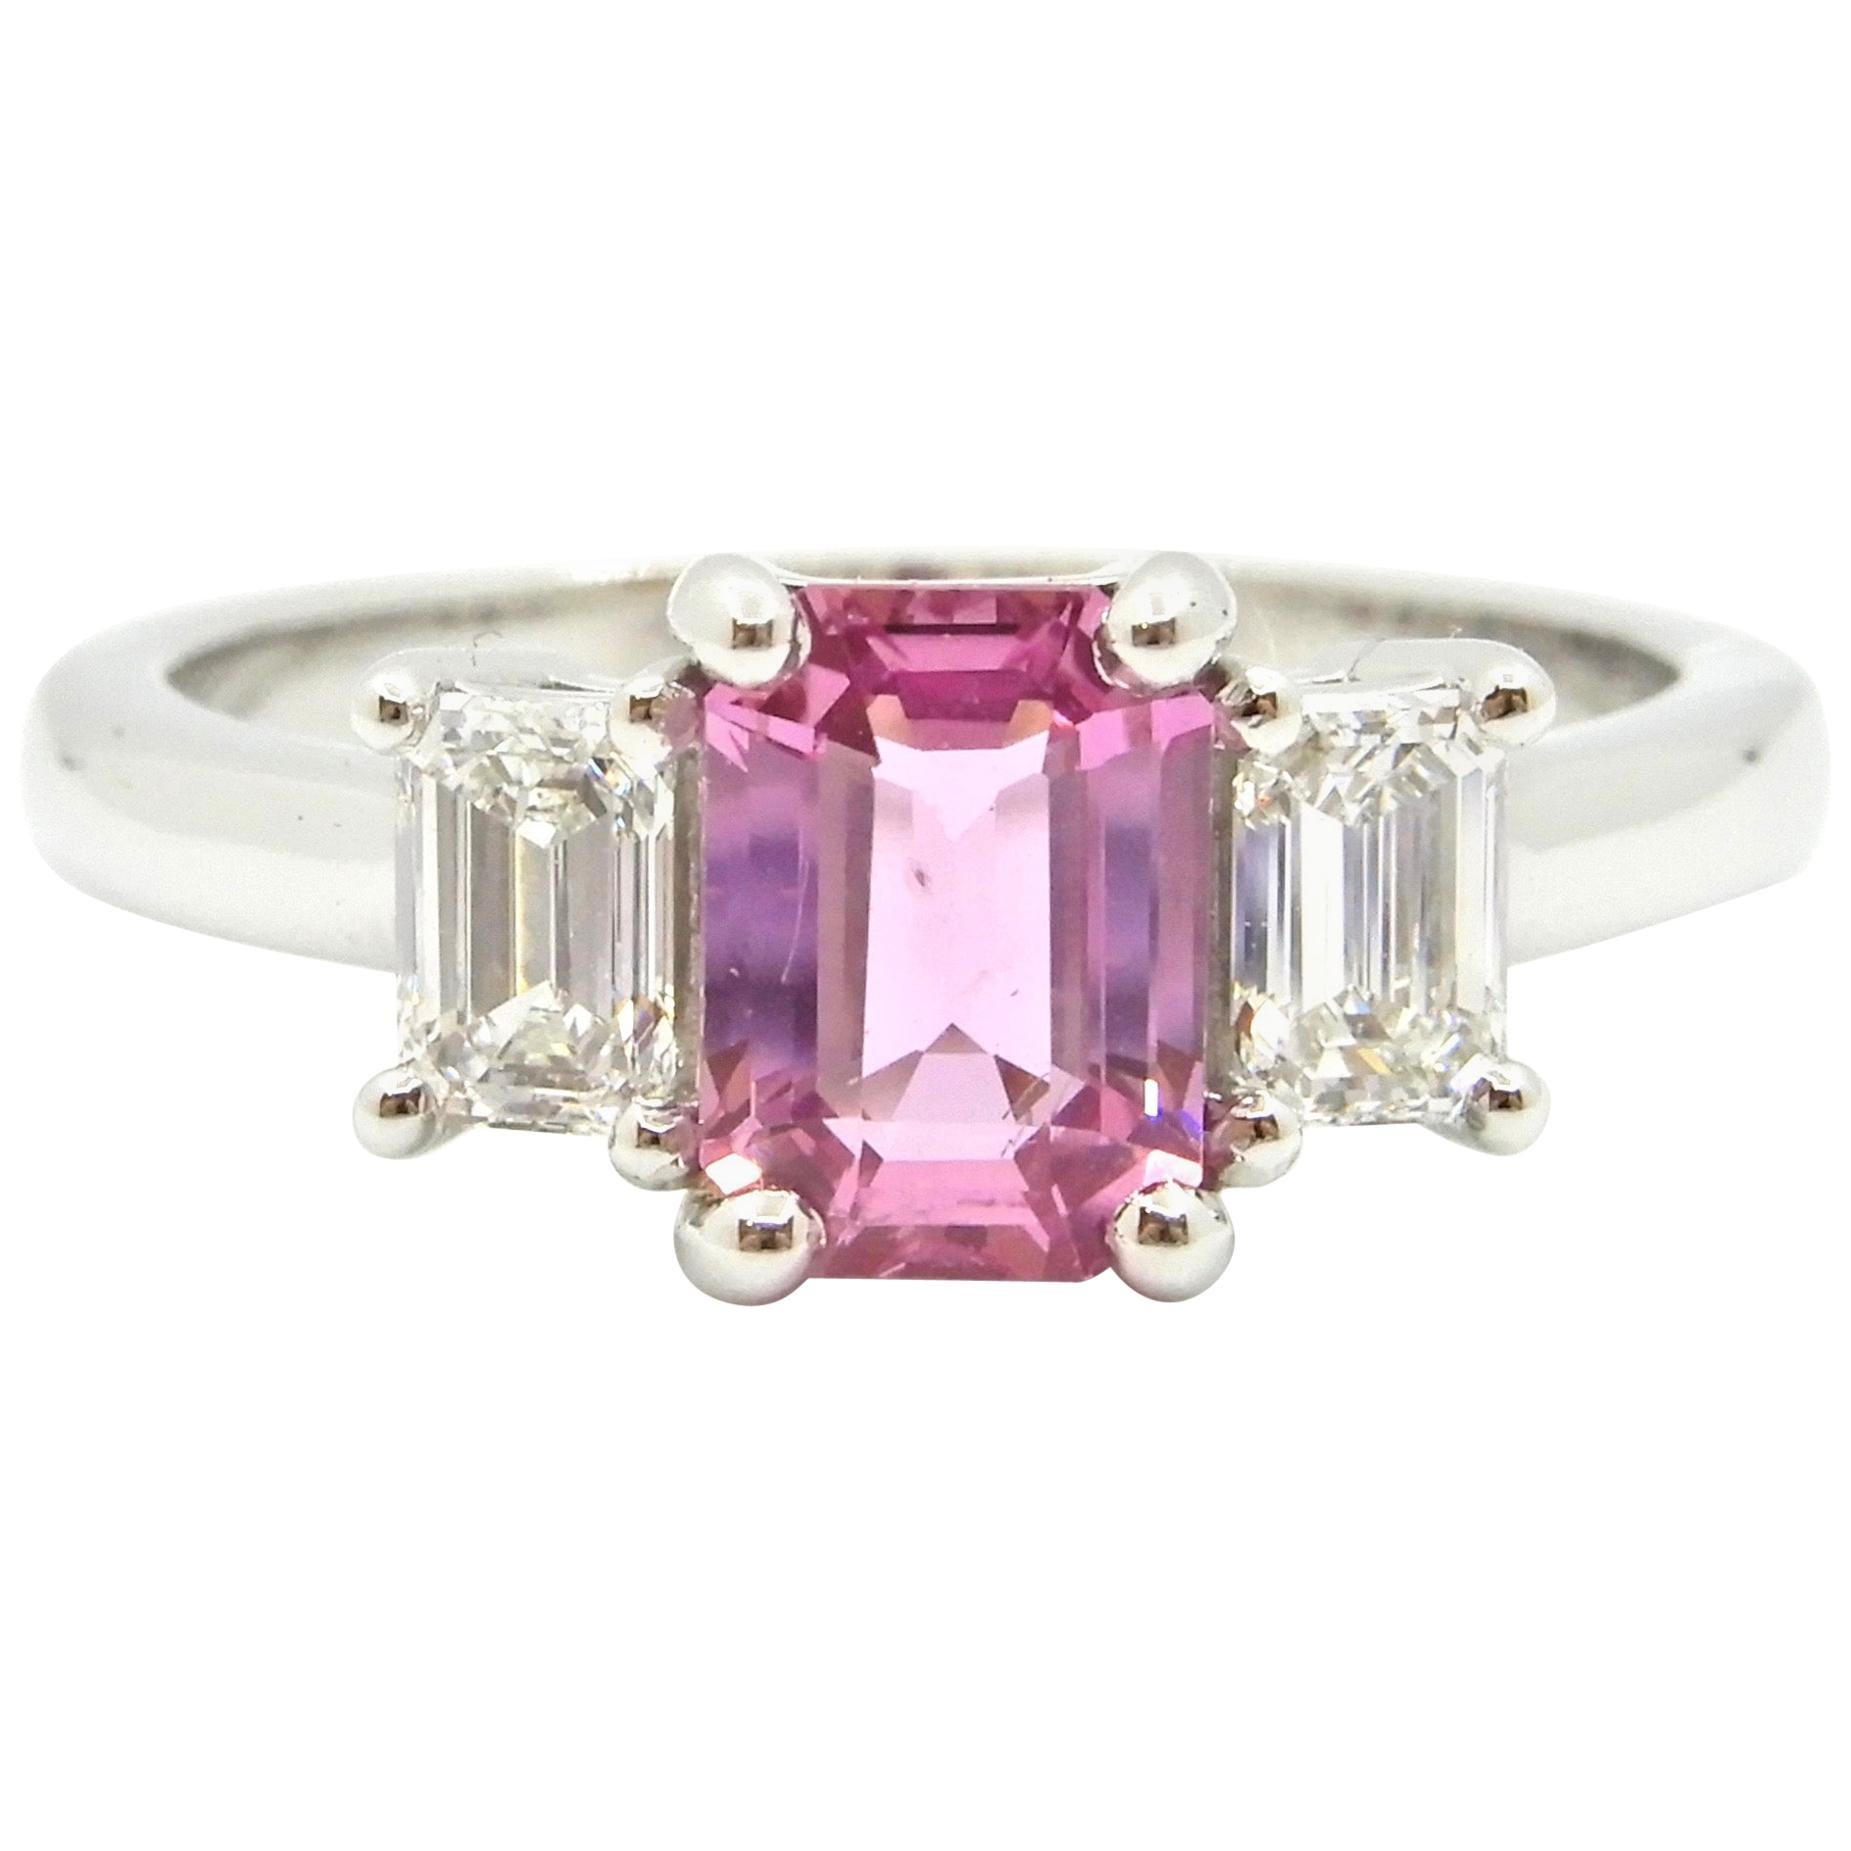 1.21 Carat Emerald Cut Pink Sapphire and Diamond Engagement Ring